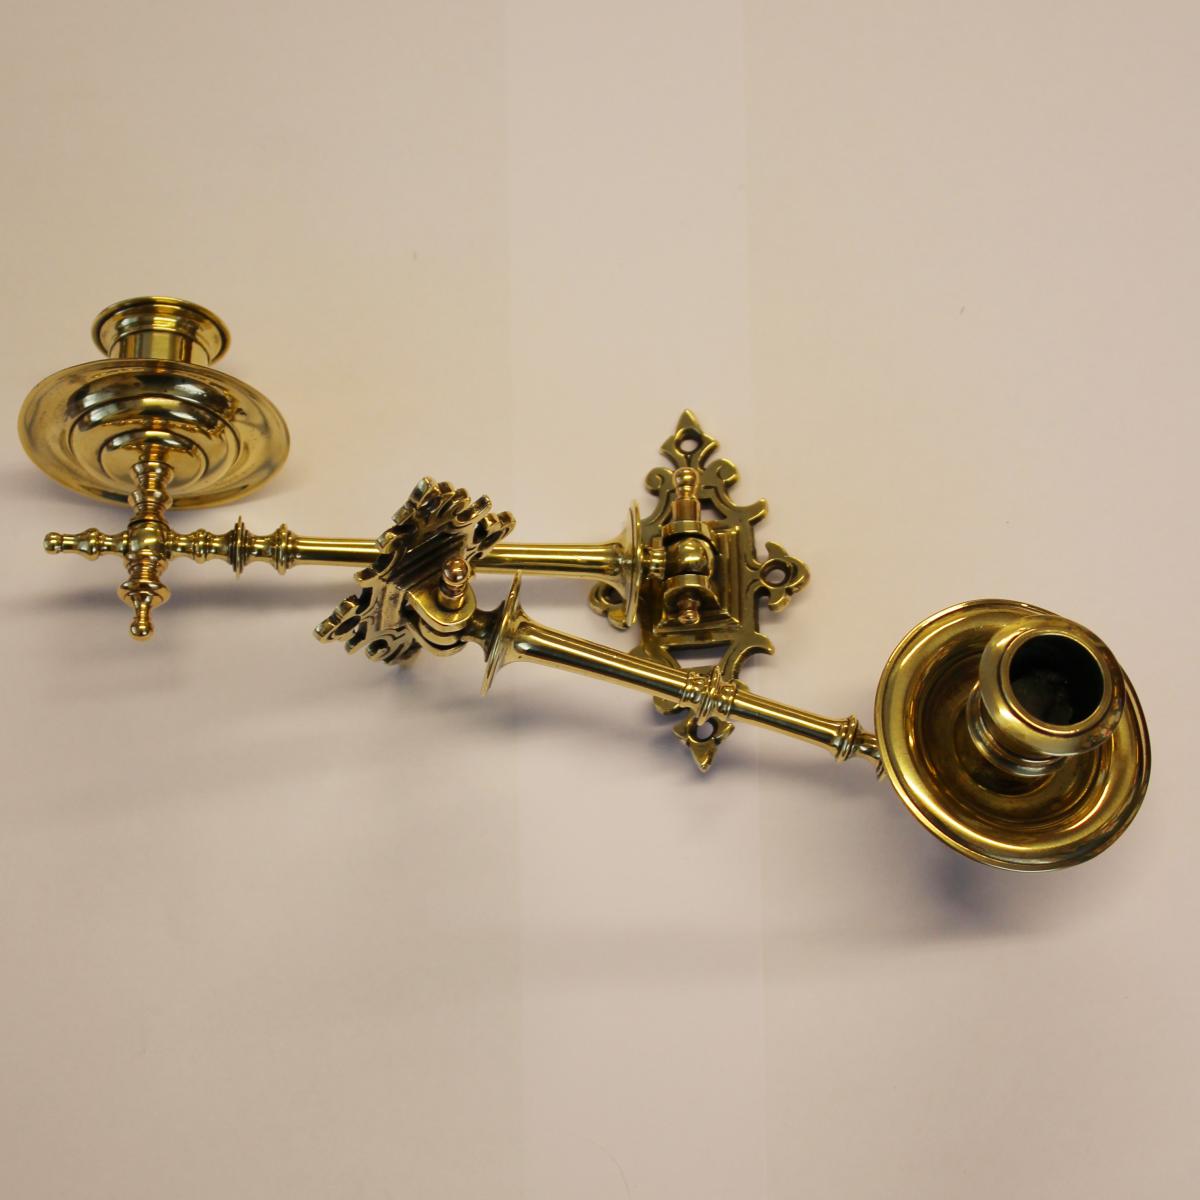 Victorian decorative antique turned brass sconces - side profile